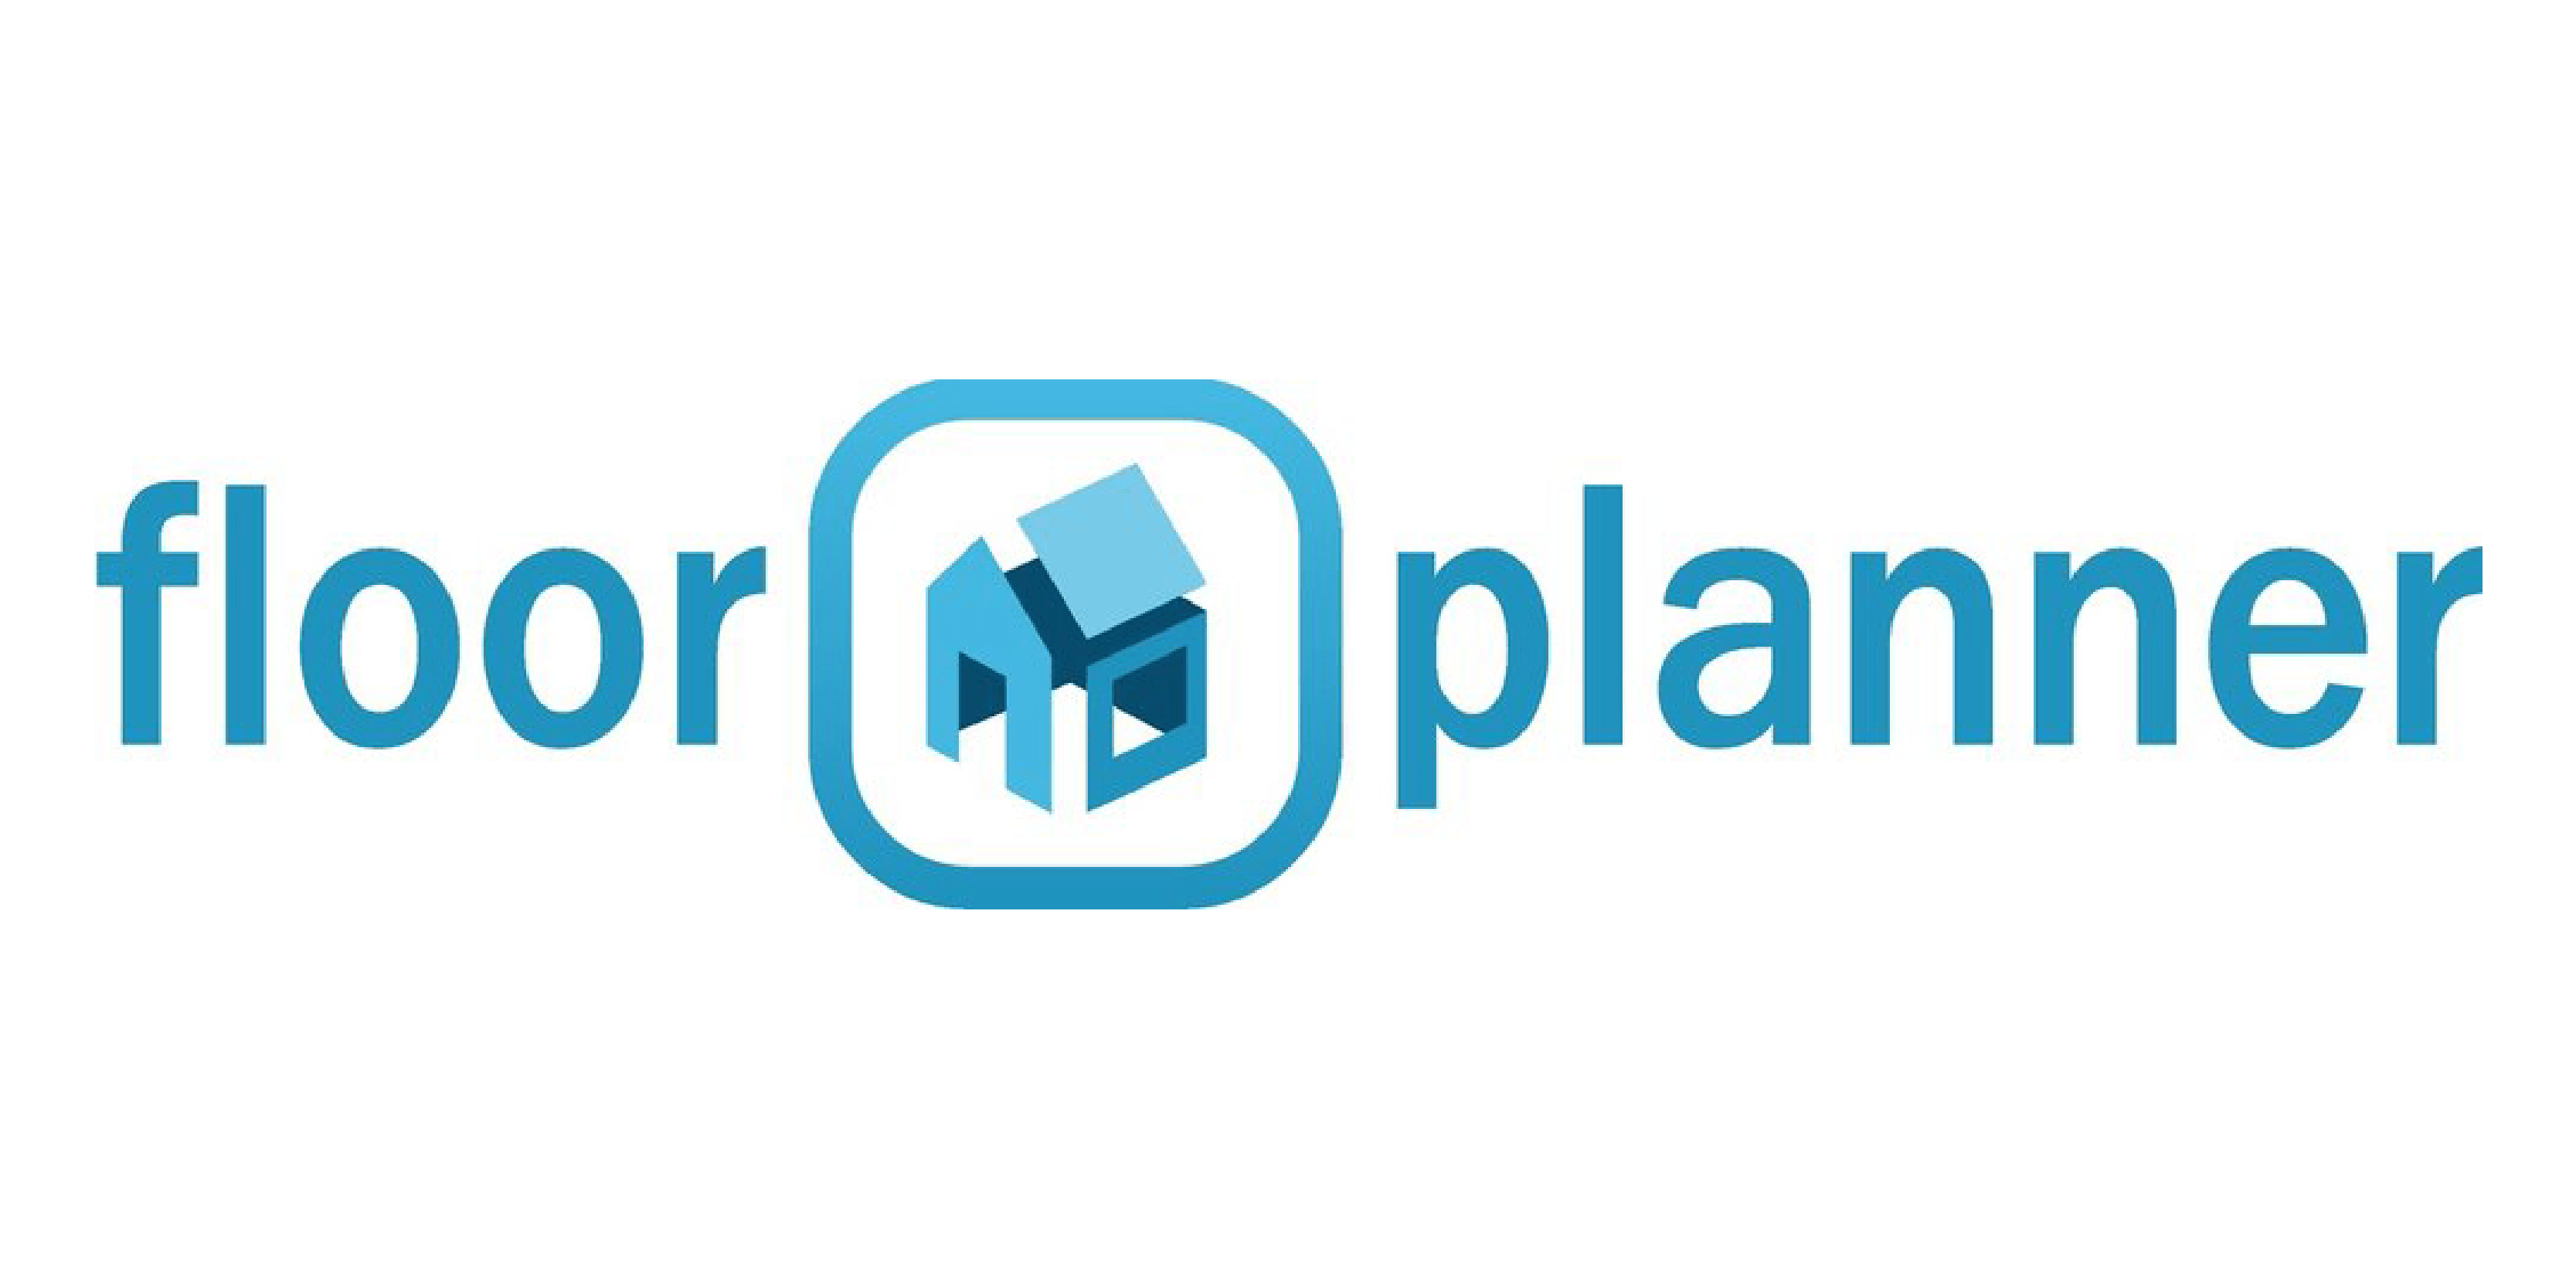 Floorplanner Logo - FloorPlanner Logo 01. Inside Property Investing